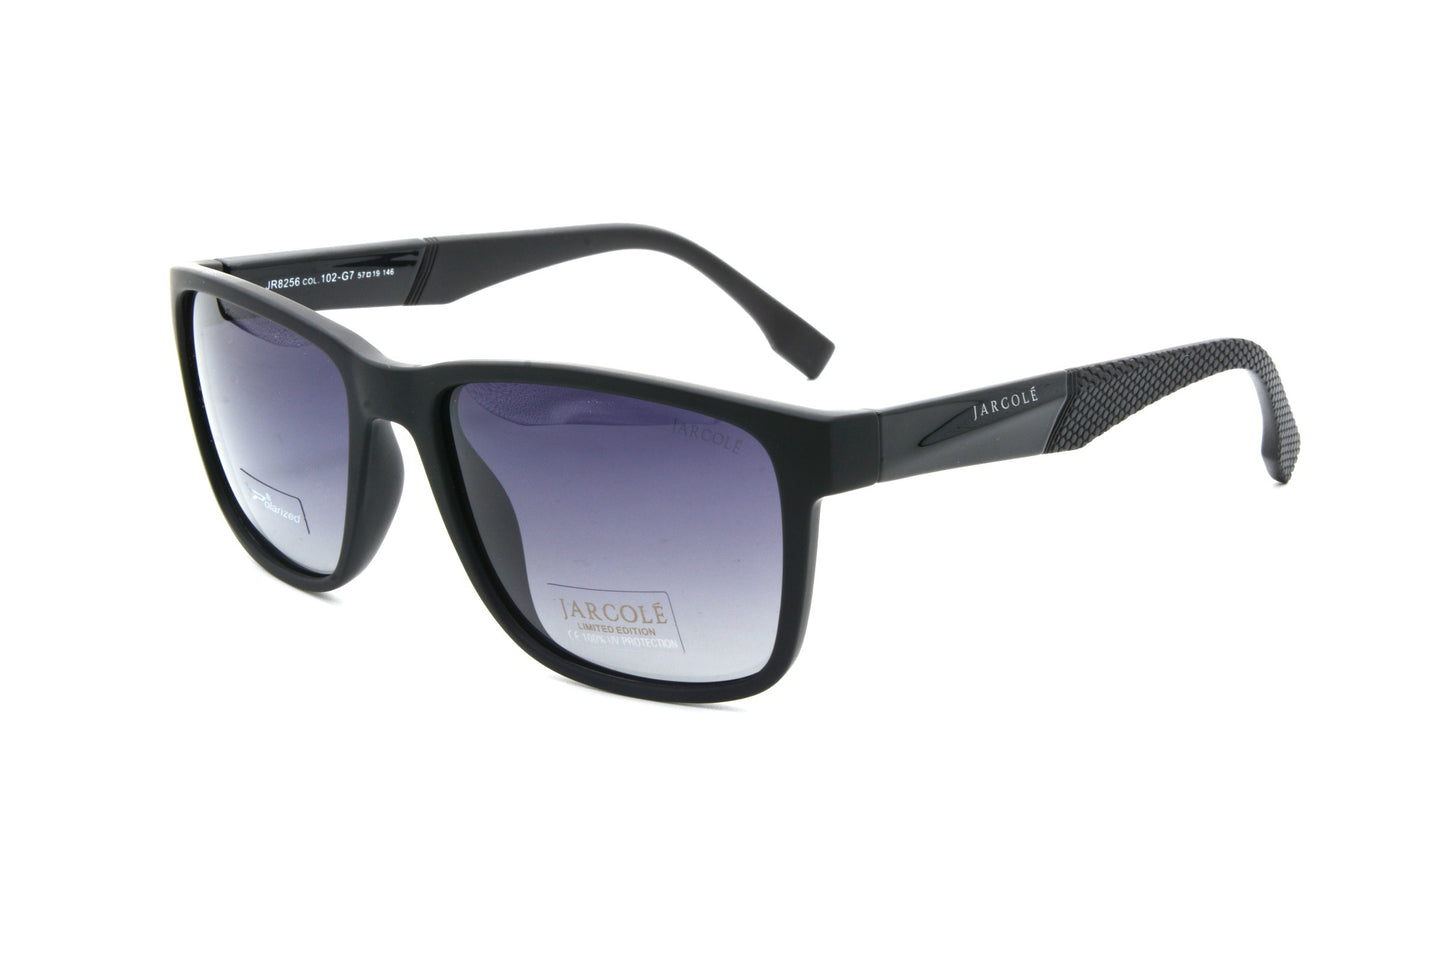 Jarcole sunglasses JR8256 102-G7